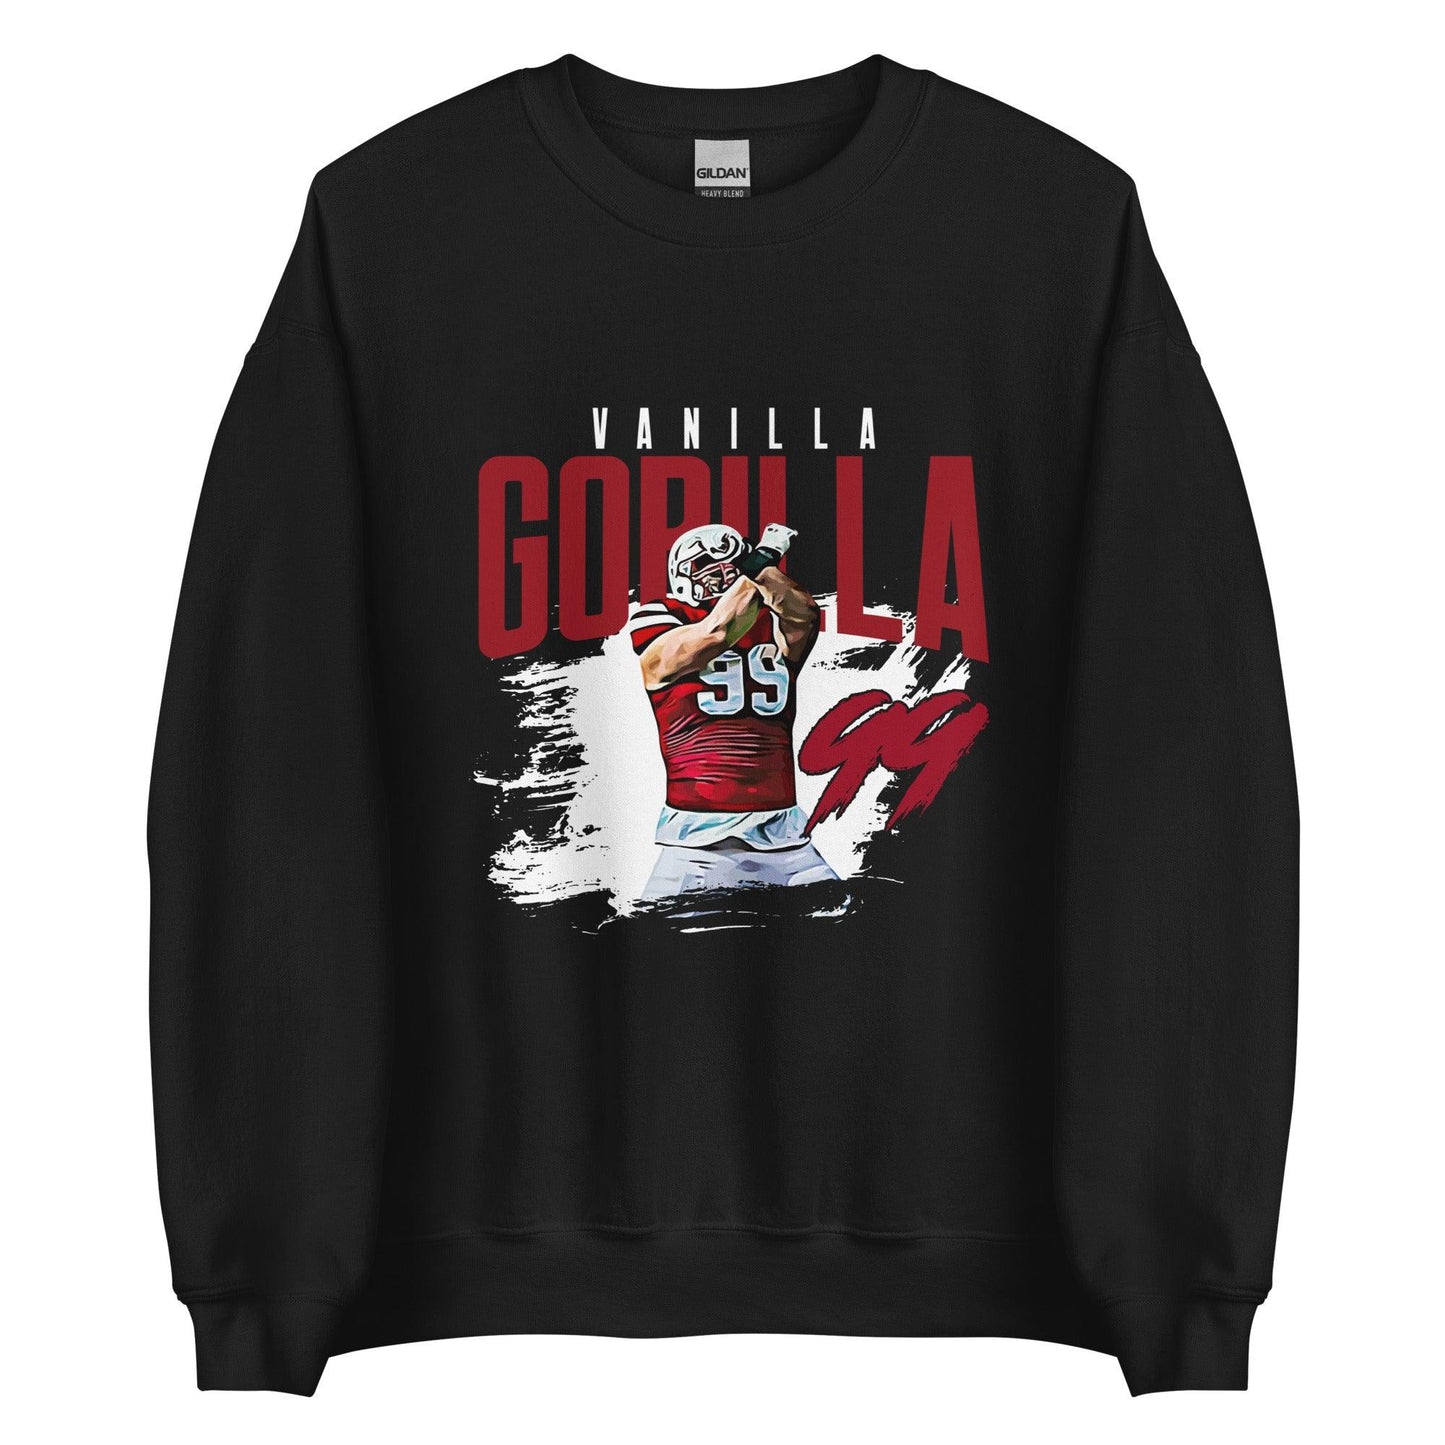 Ty Robinson "Vanilla Gorilla" Sweatshirt - Fan Arch